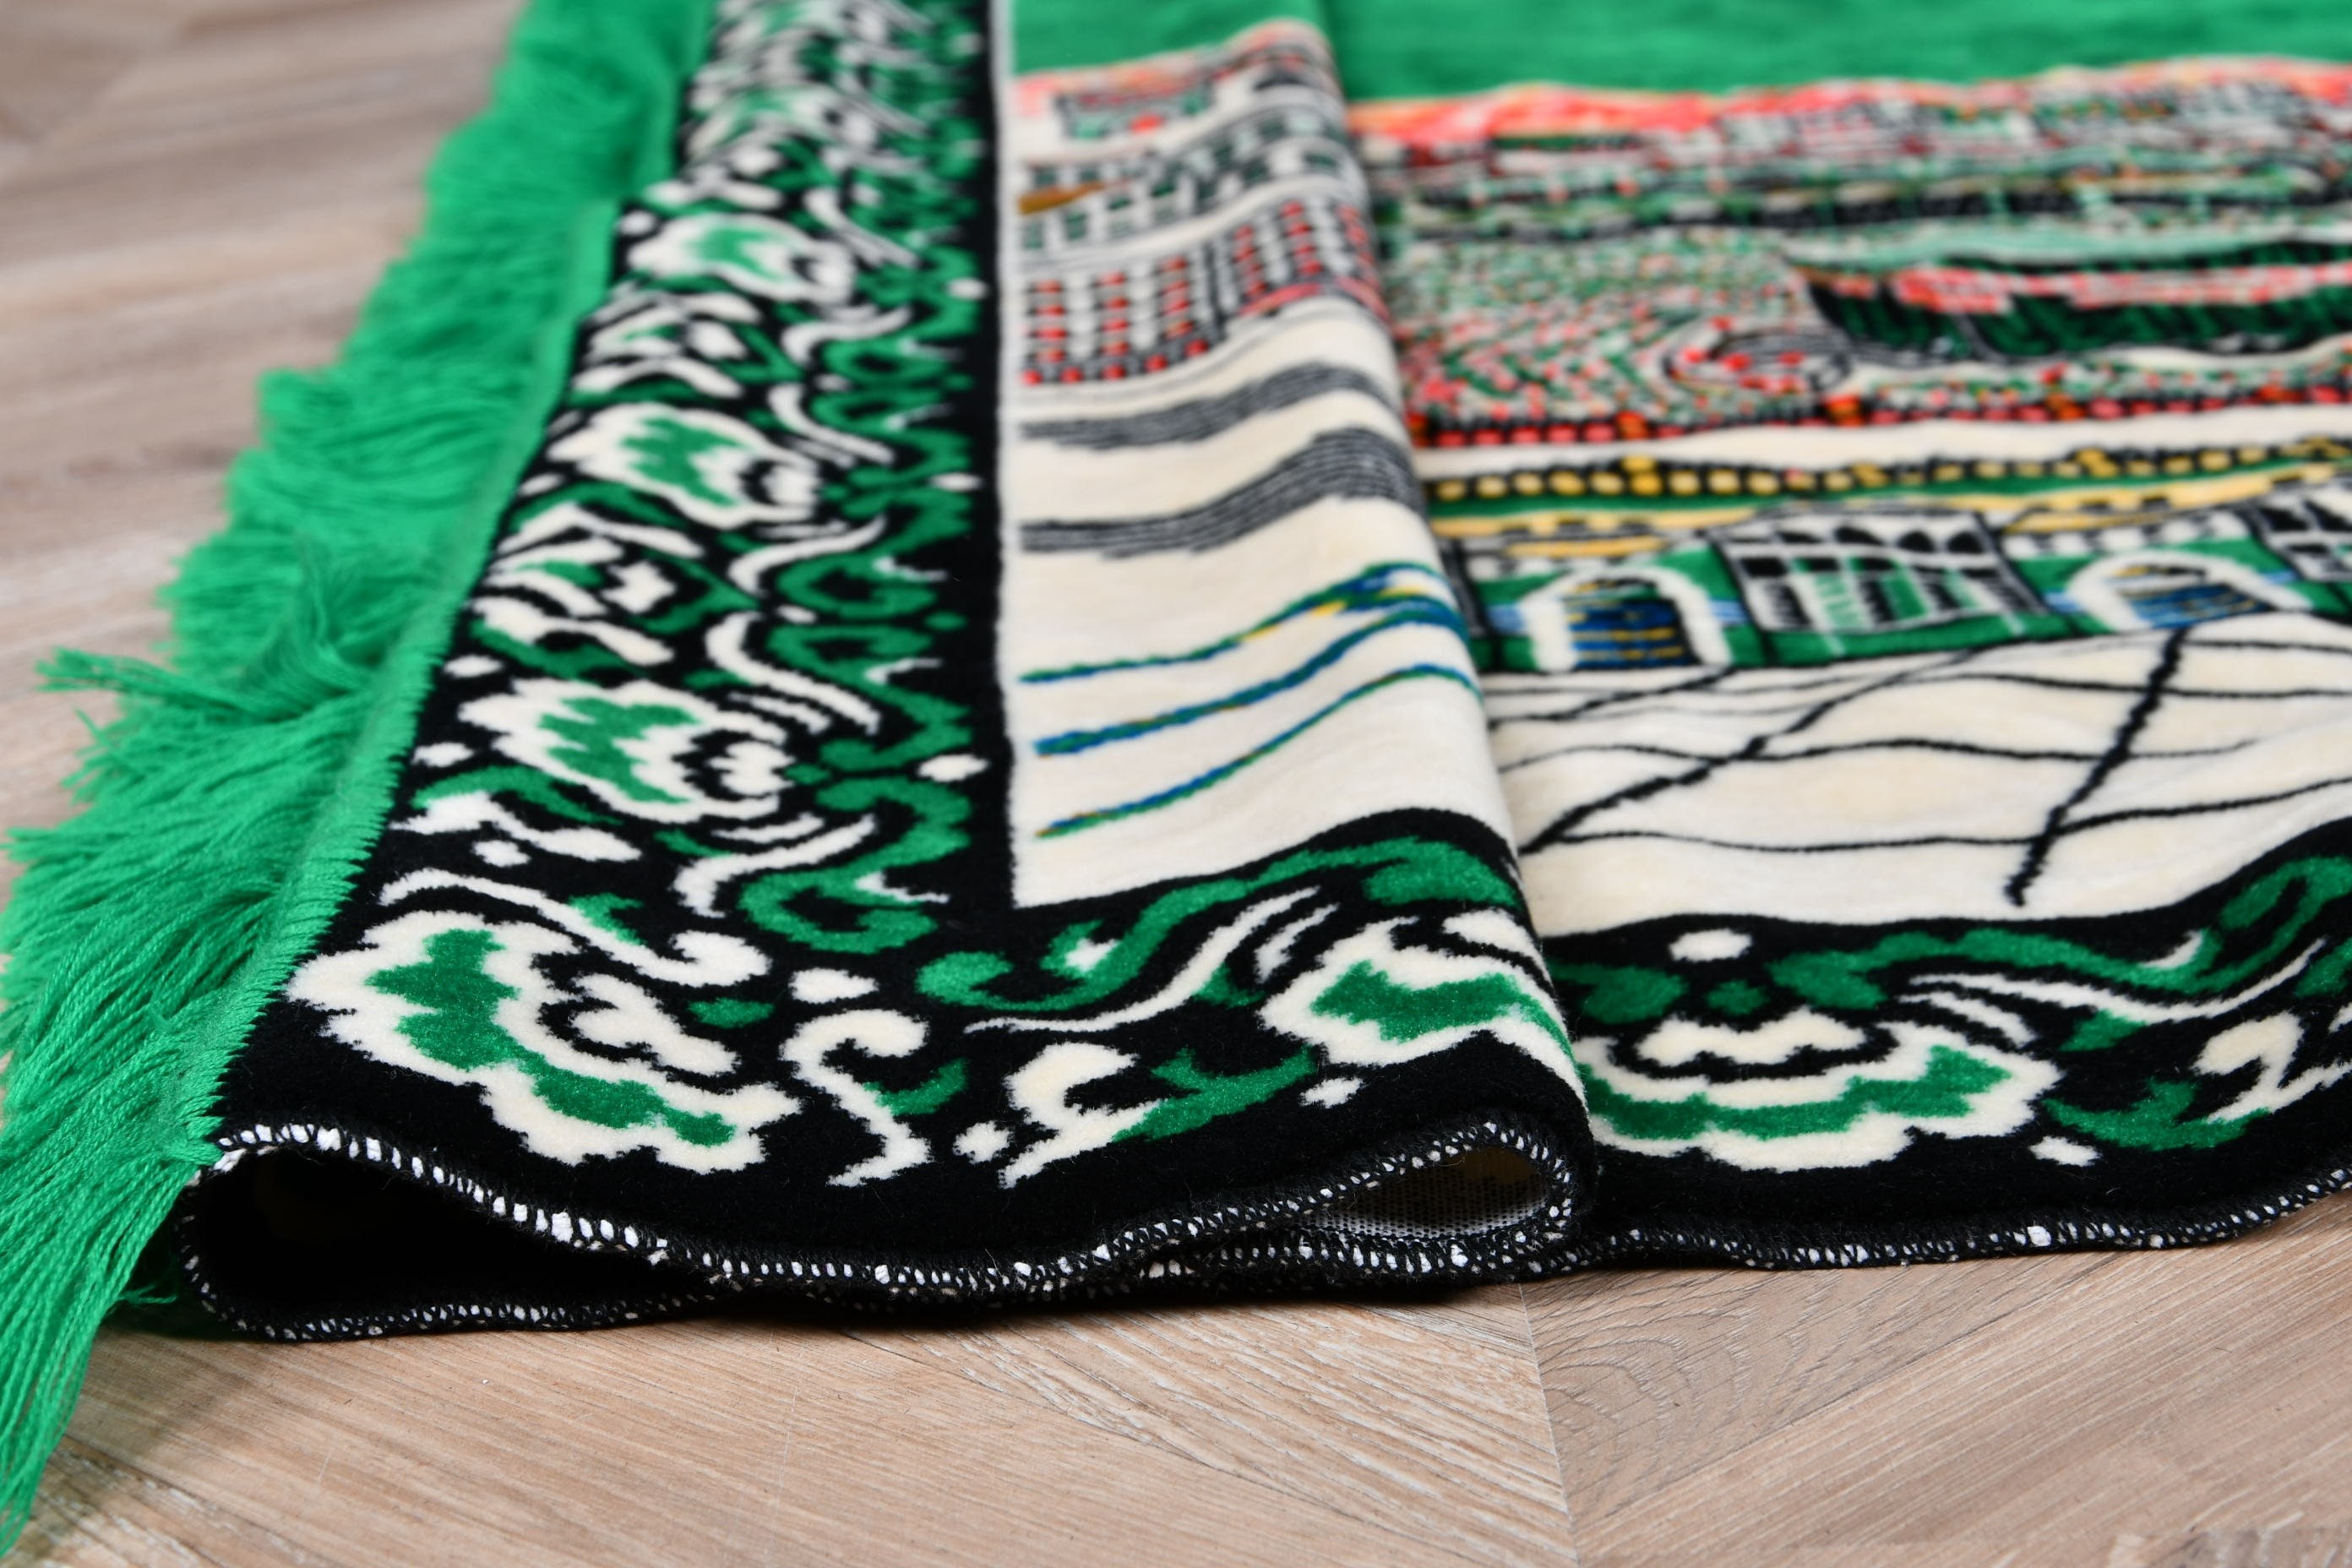 Turkish Rug, Cute Rug, Entry Rug, Green Oriental Rug, Kilim, 4.2x5.1 ft Accent Rug, Vintage Rug, Bedroom Rugs, Anatolian Rug